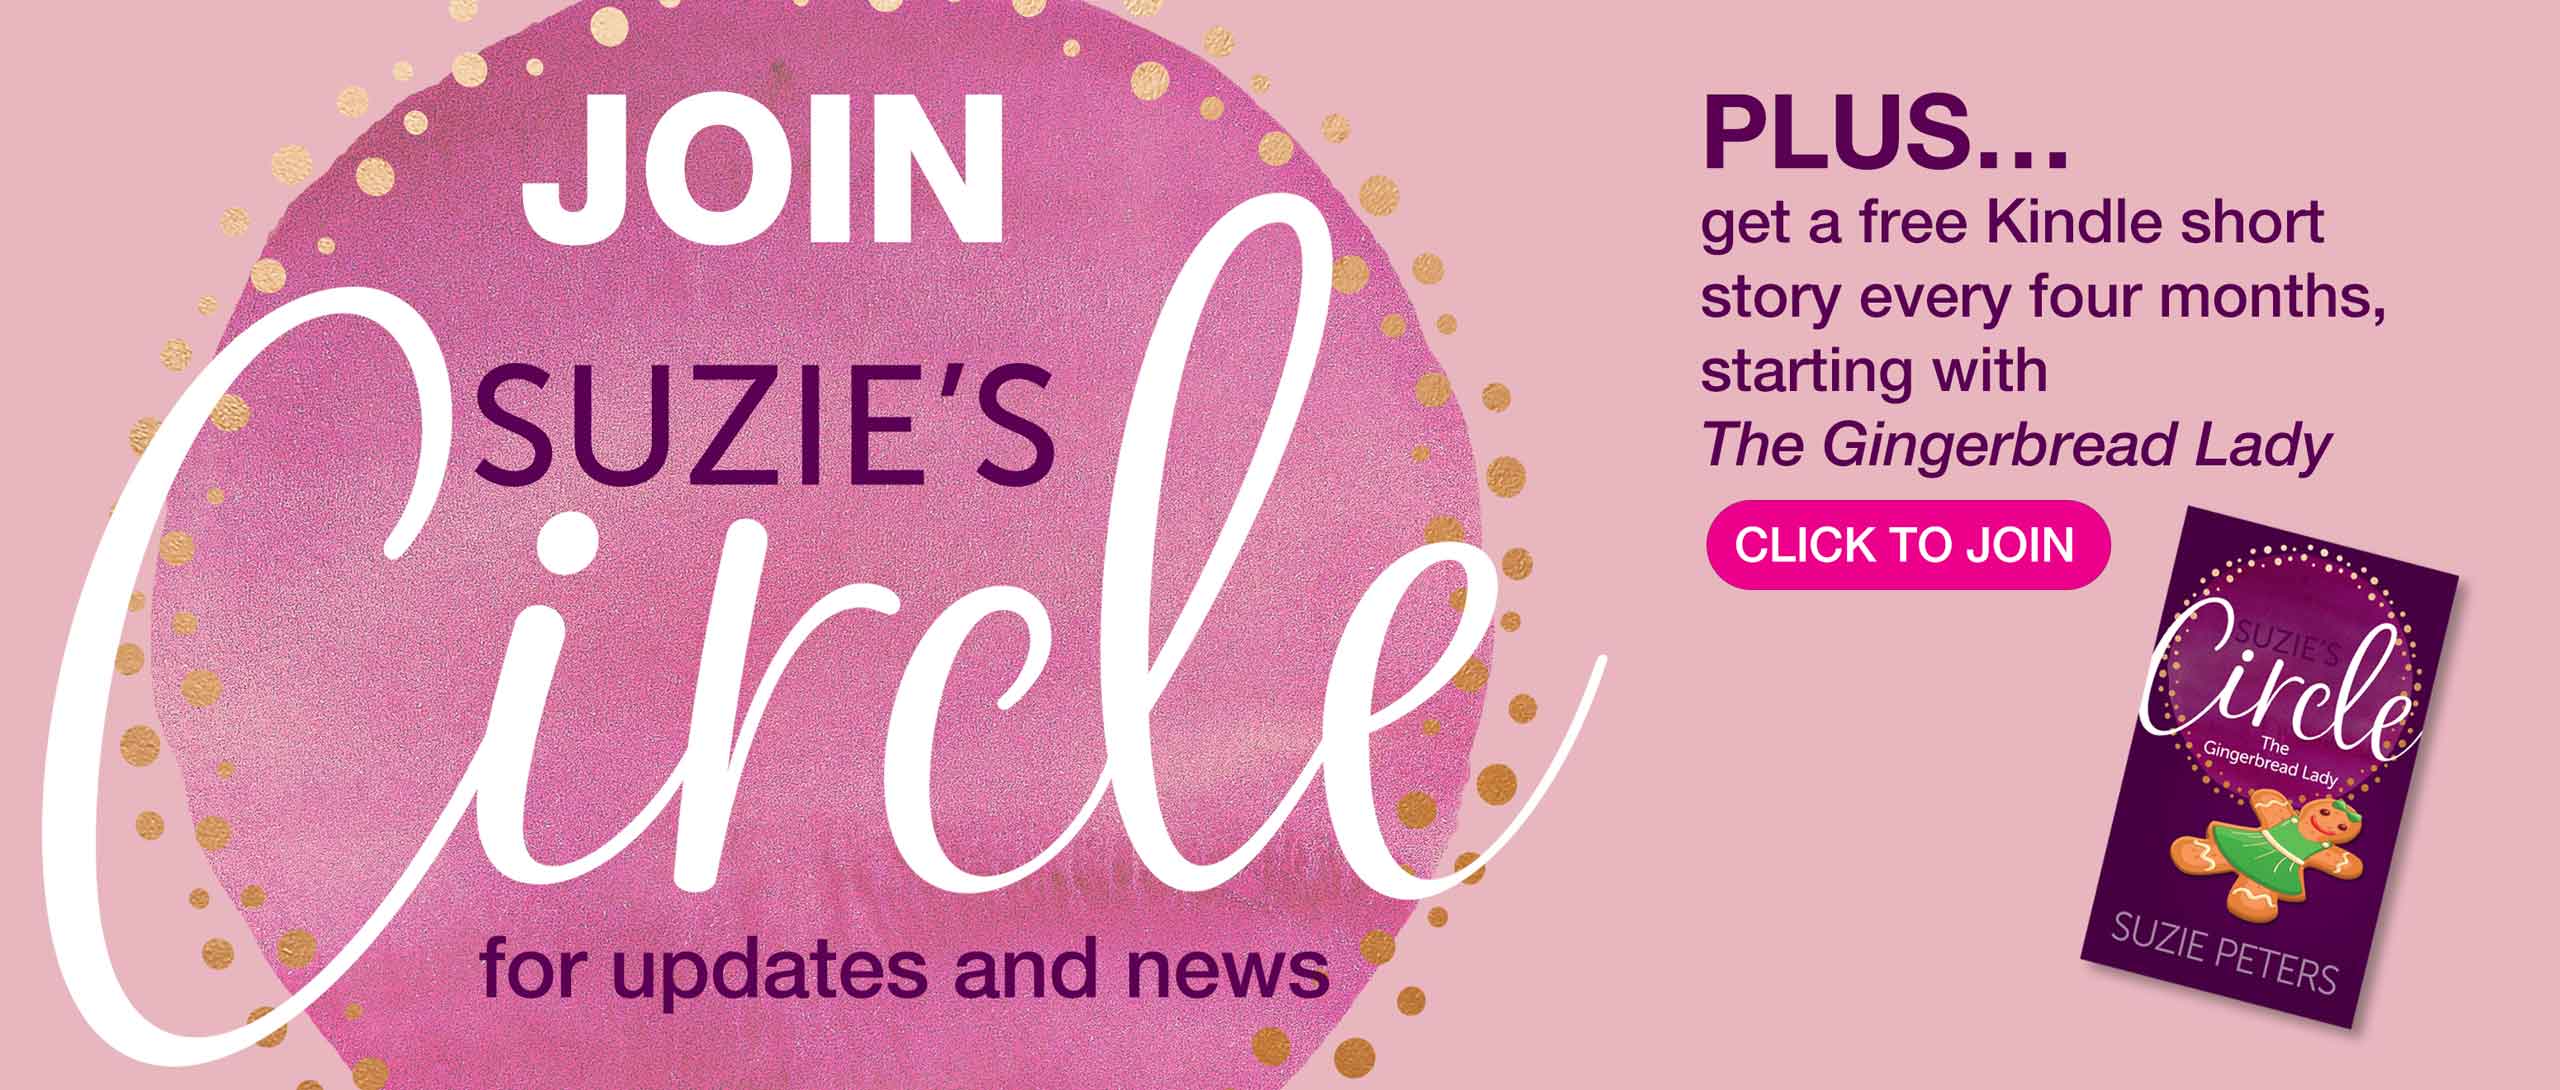 Suzie's Circle